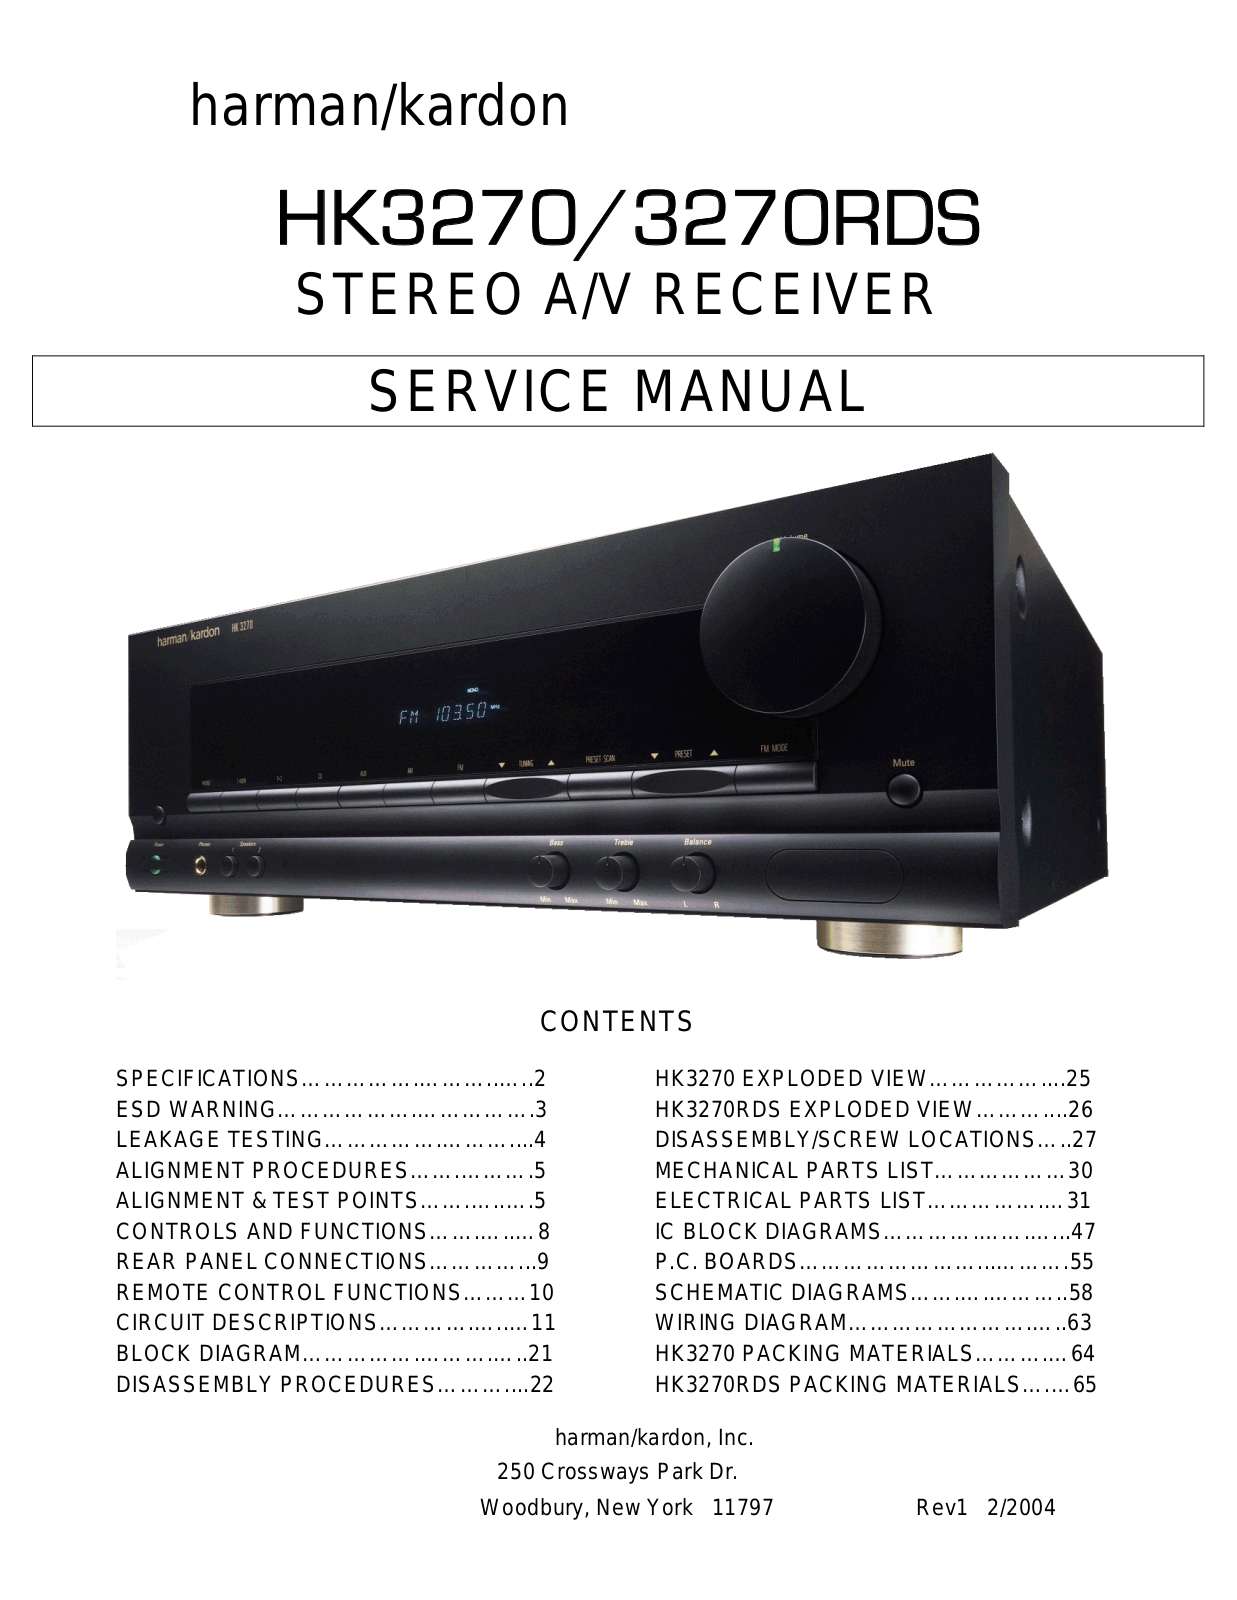 Harman Kardon HK-3270 Service manual